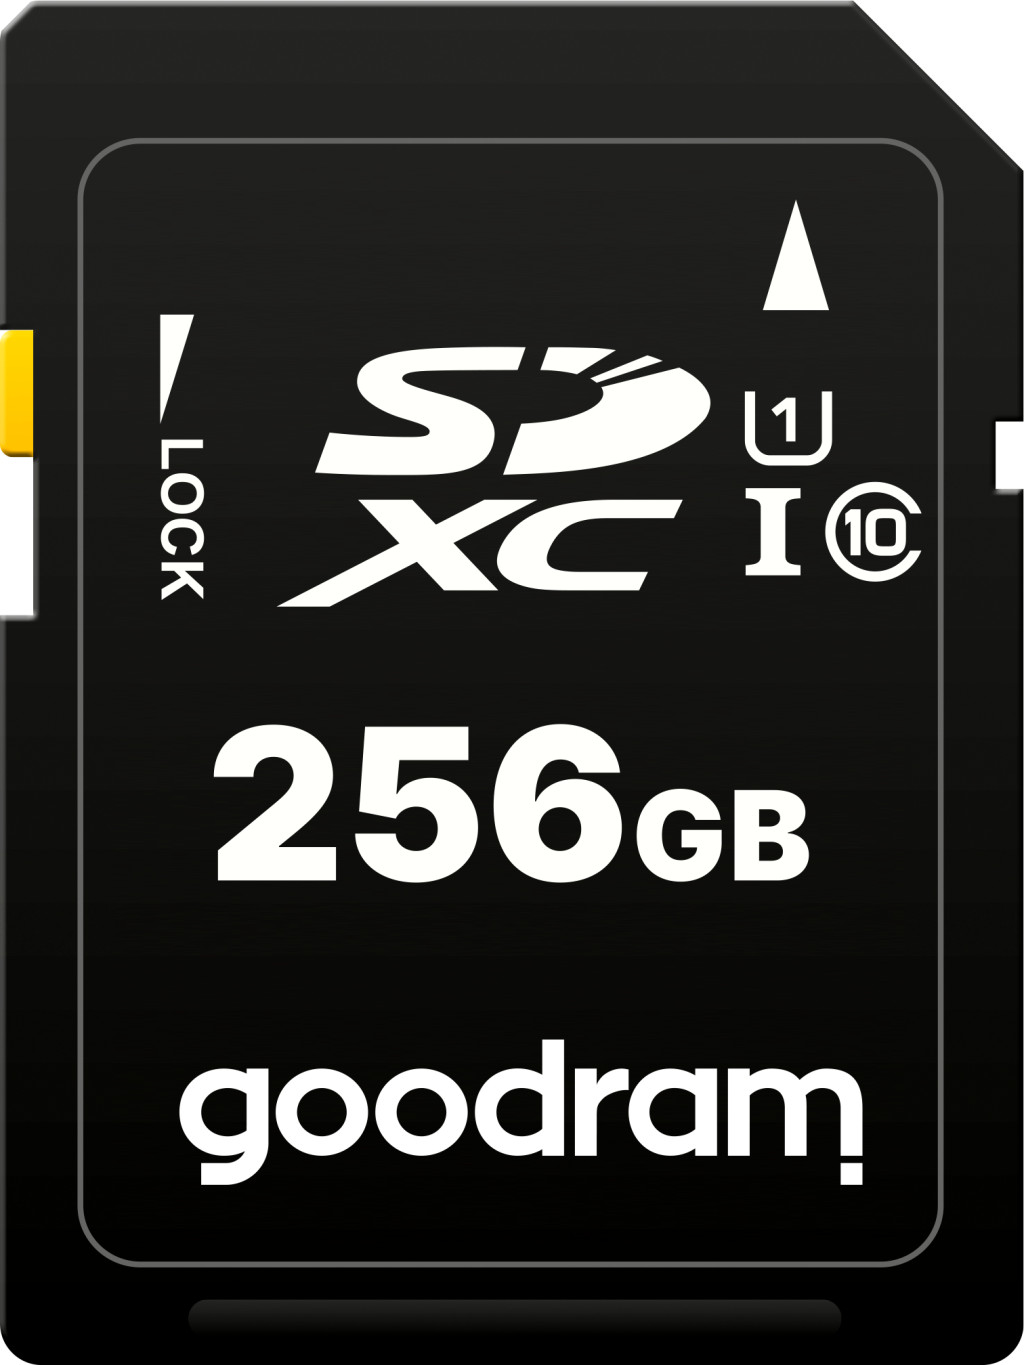 GOODRAM 256GB MEMORY CARD class 10 UHS